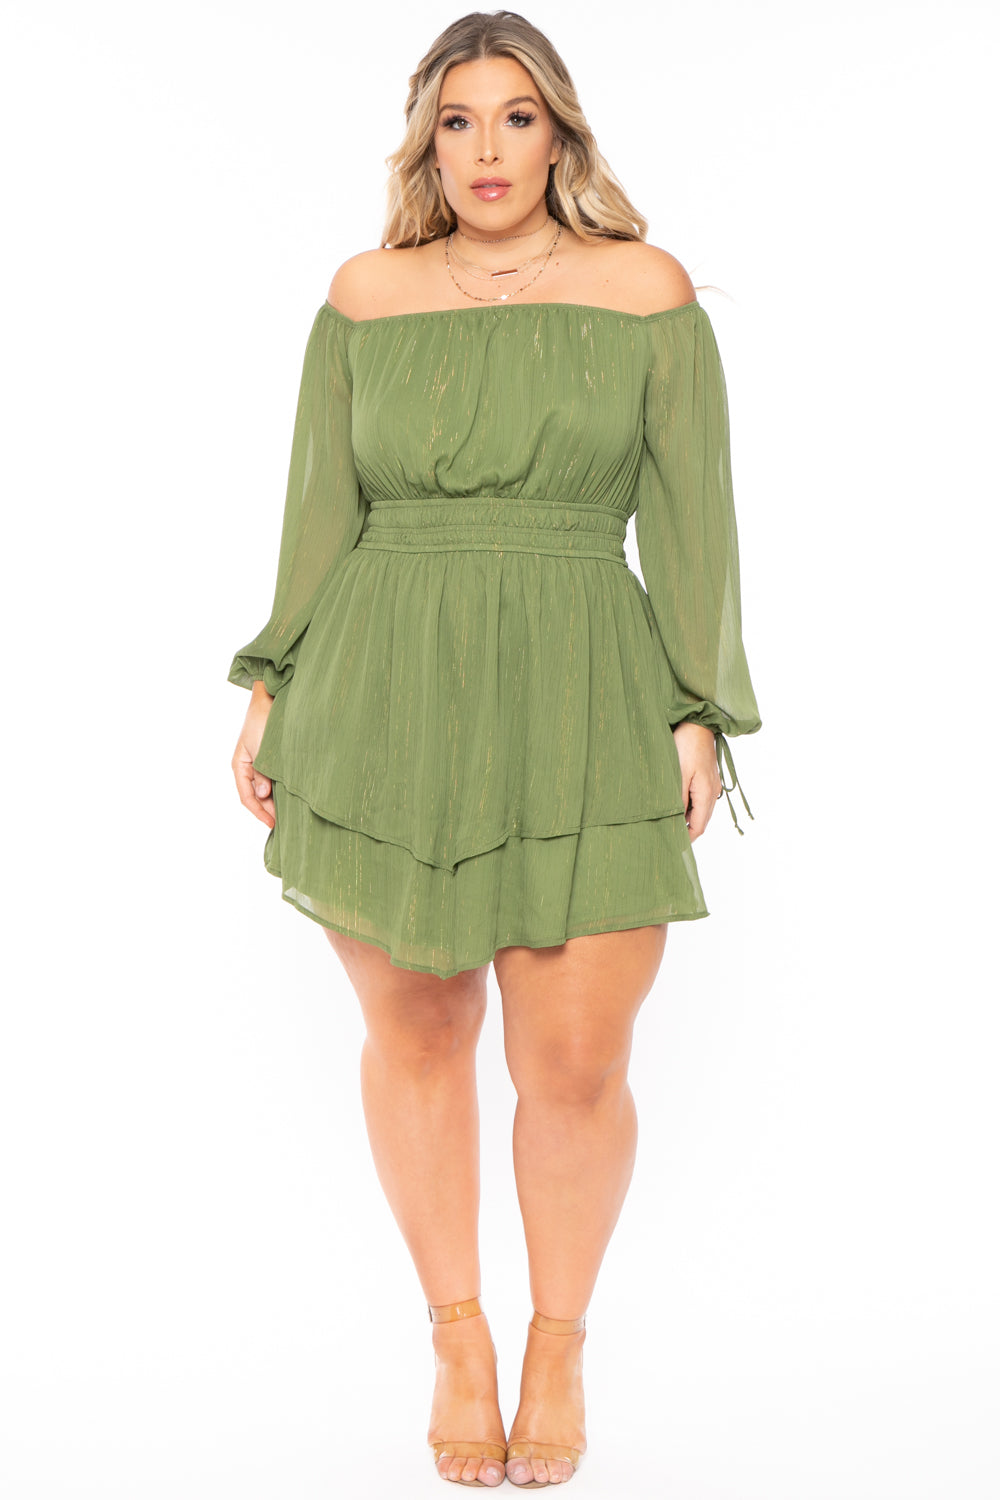 Plus Size Jolene Chiffon Dress - Olive